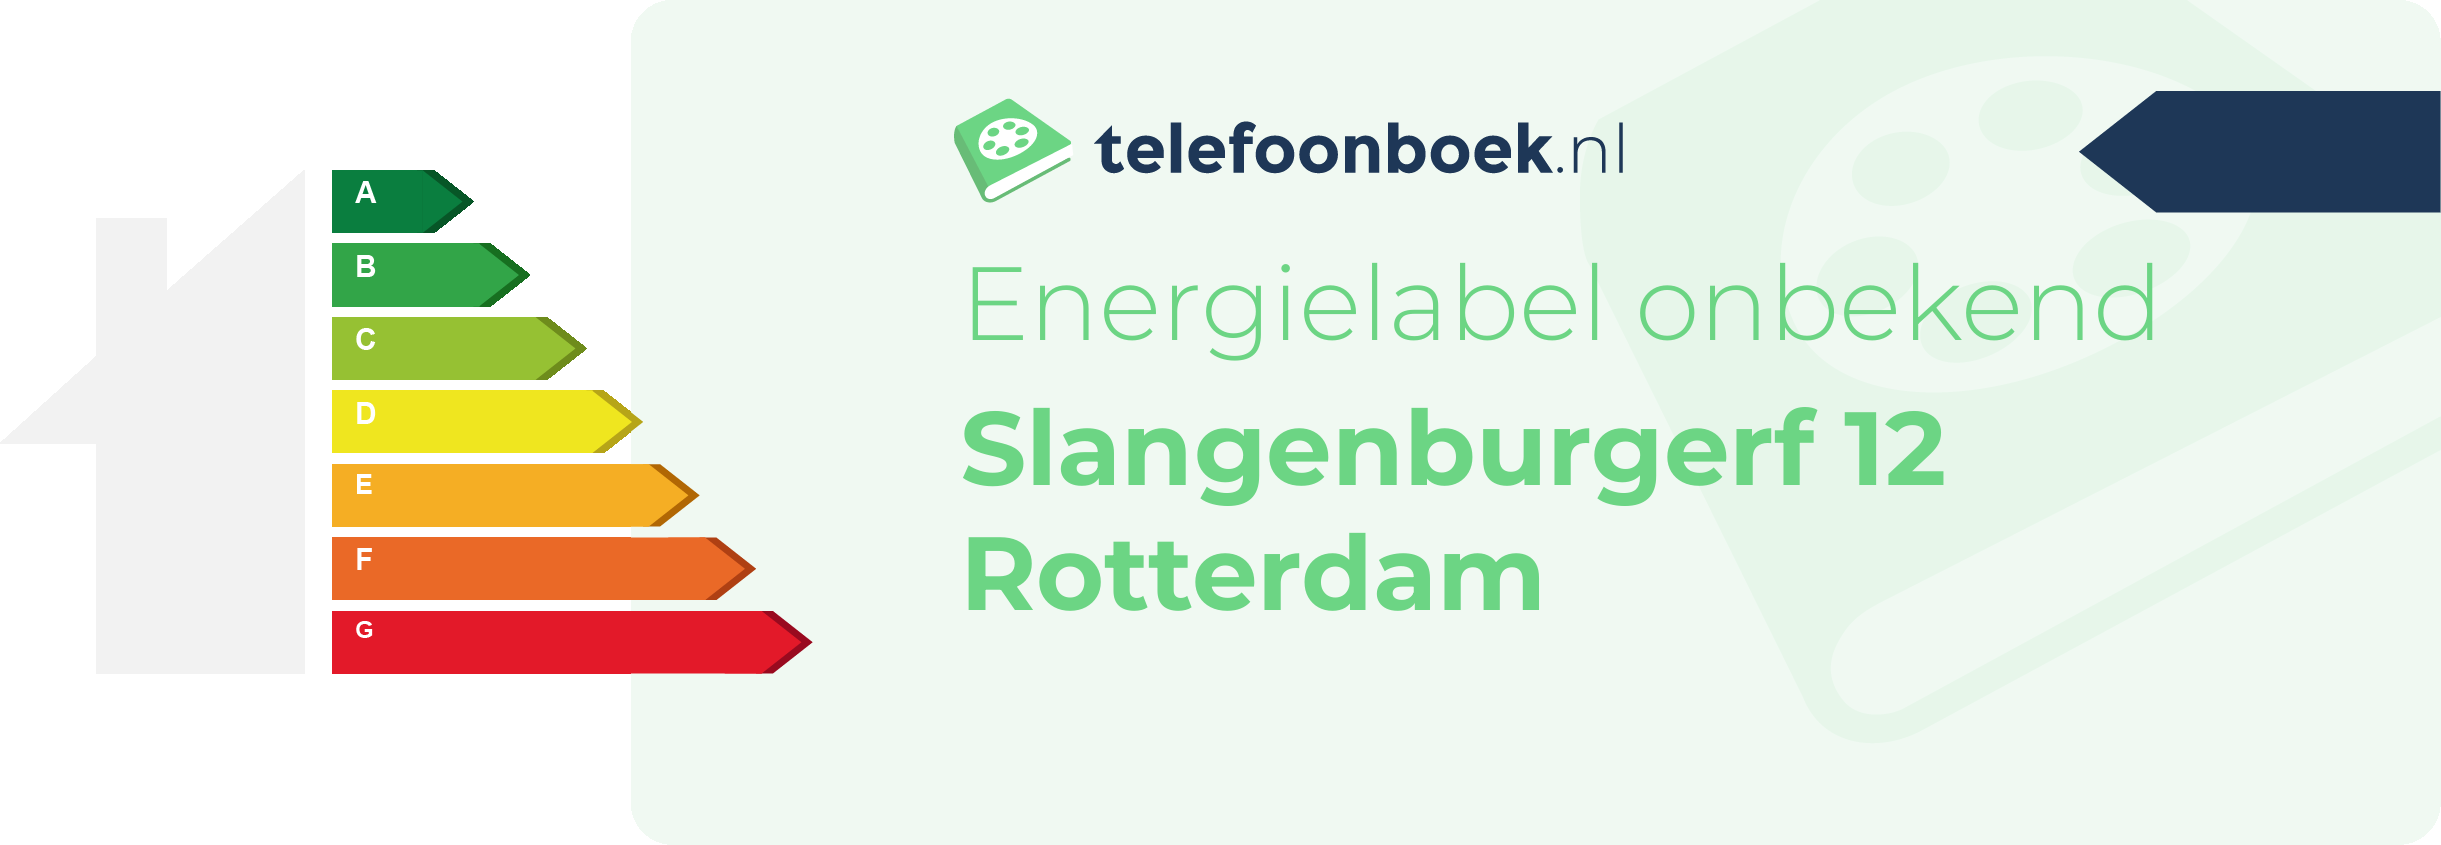 Energielabel Slangenburgerf 12 Rotterdam